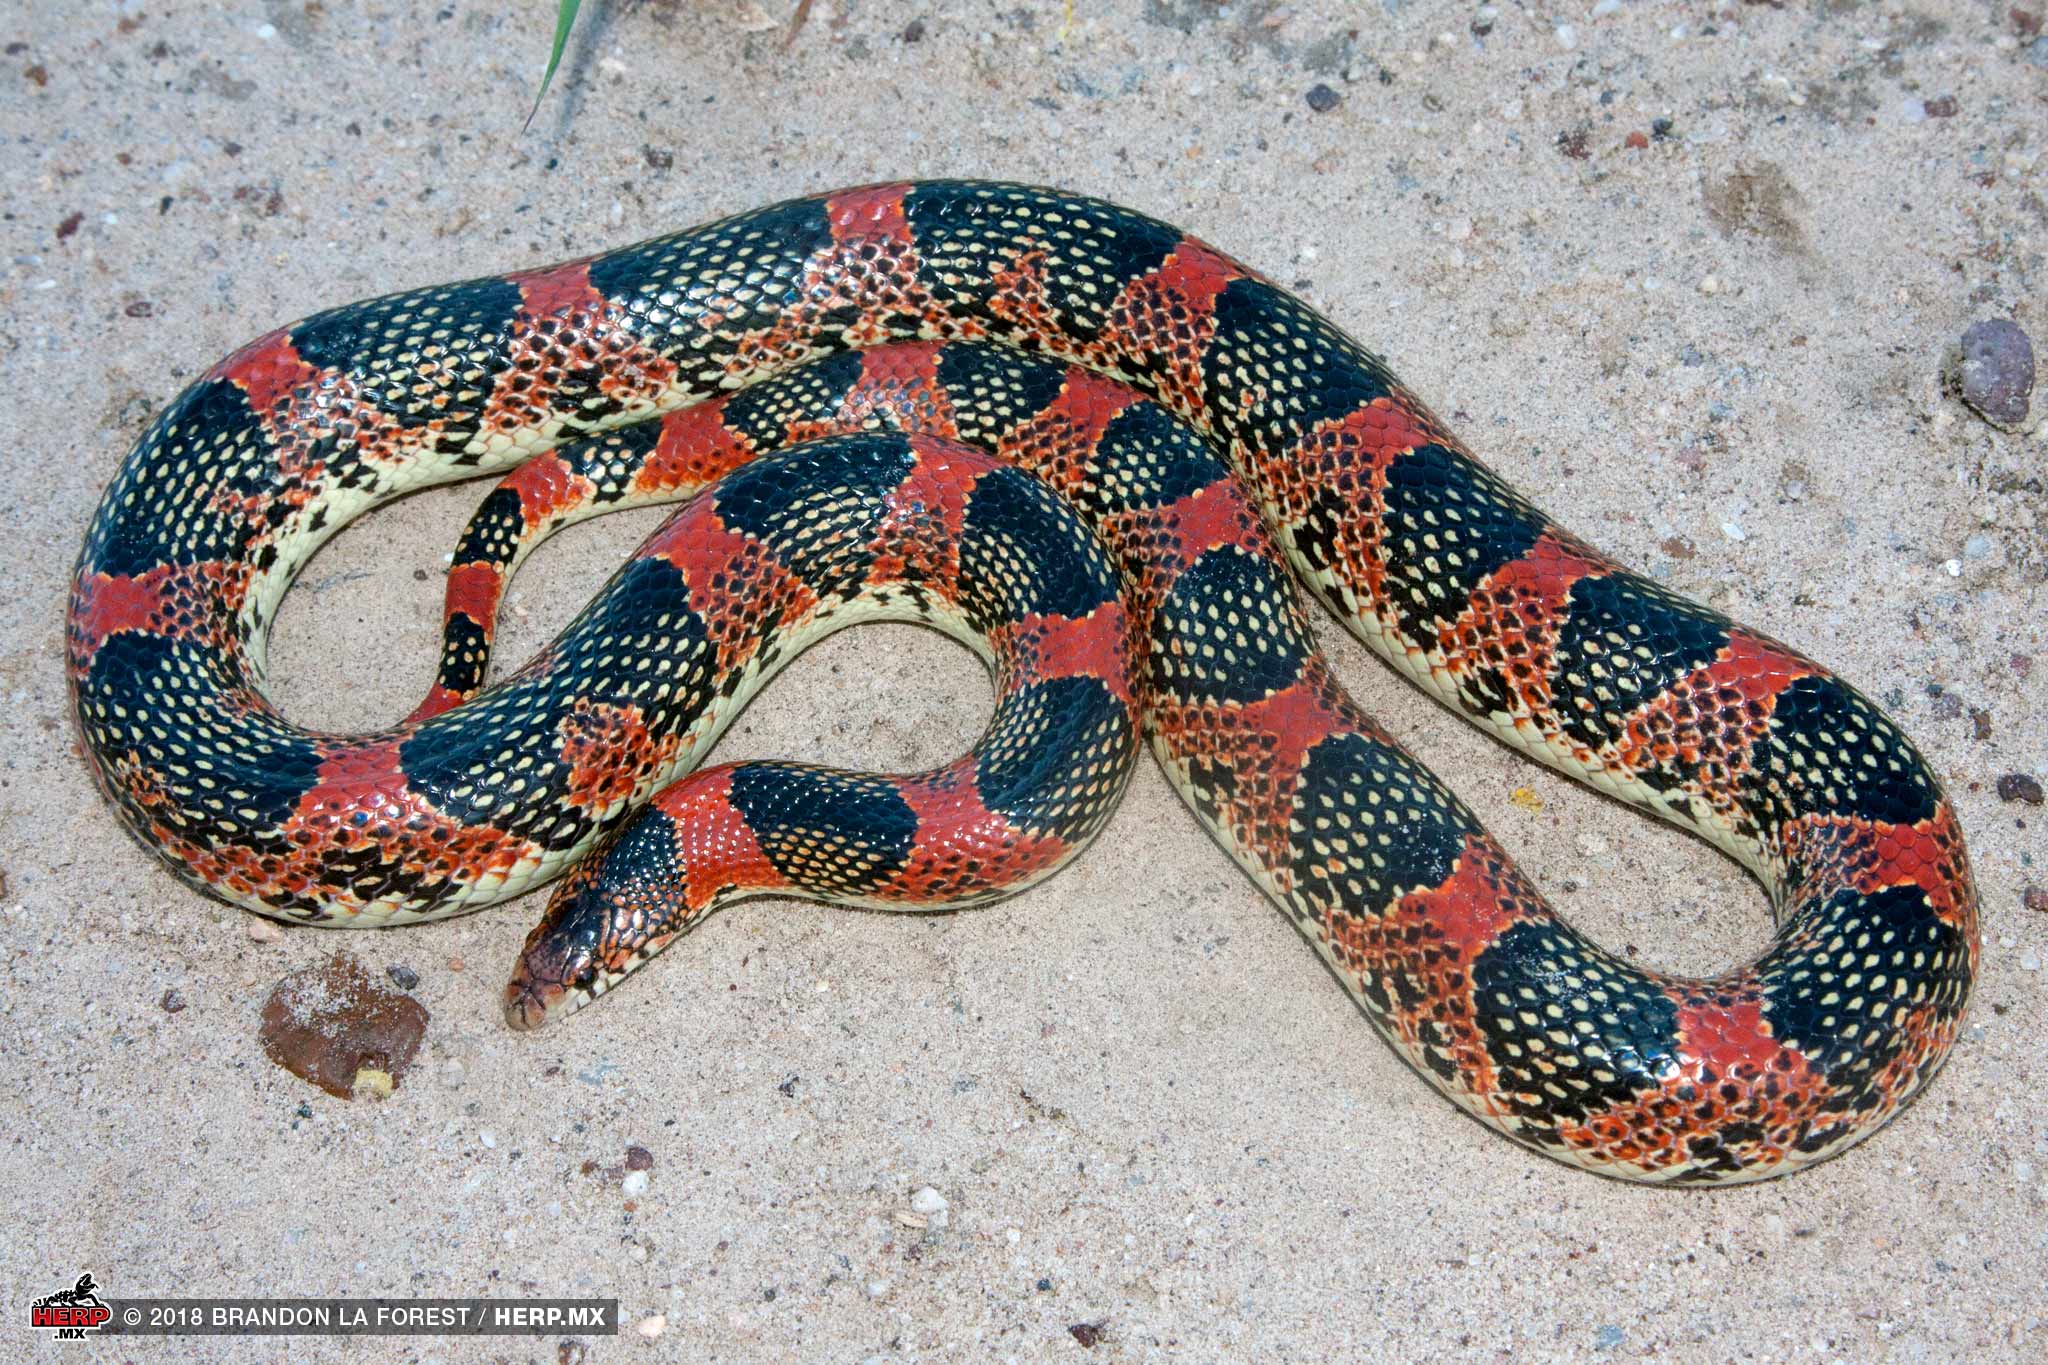 Cerralvo Island Longnose Snake (Rhinocheilus etheridgei) © Brandon La Forest / HERP.MX